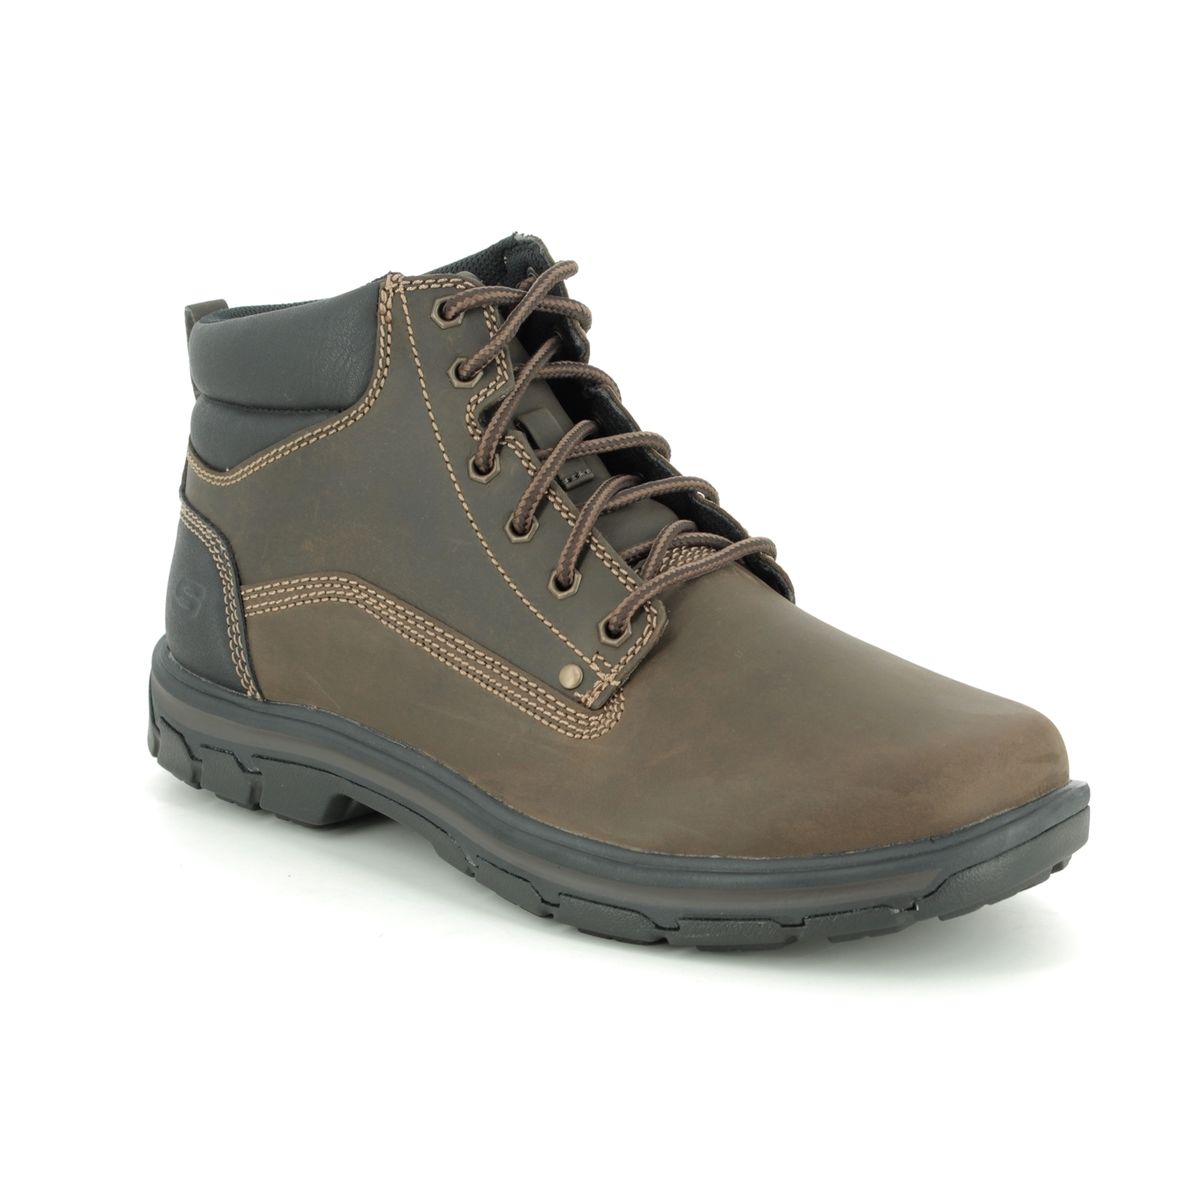 Skechers Segment Garnet 65573 CHOC Chocolate brown boots